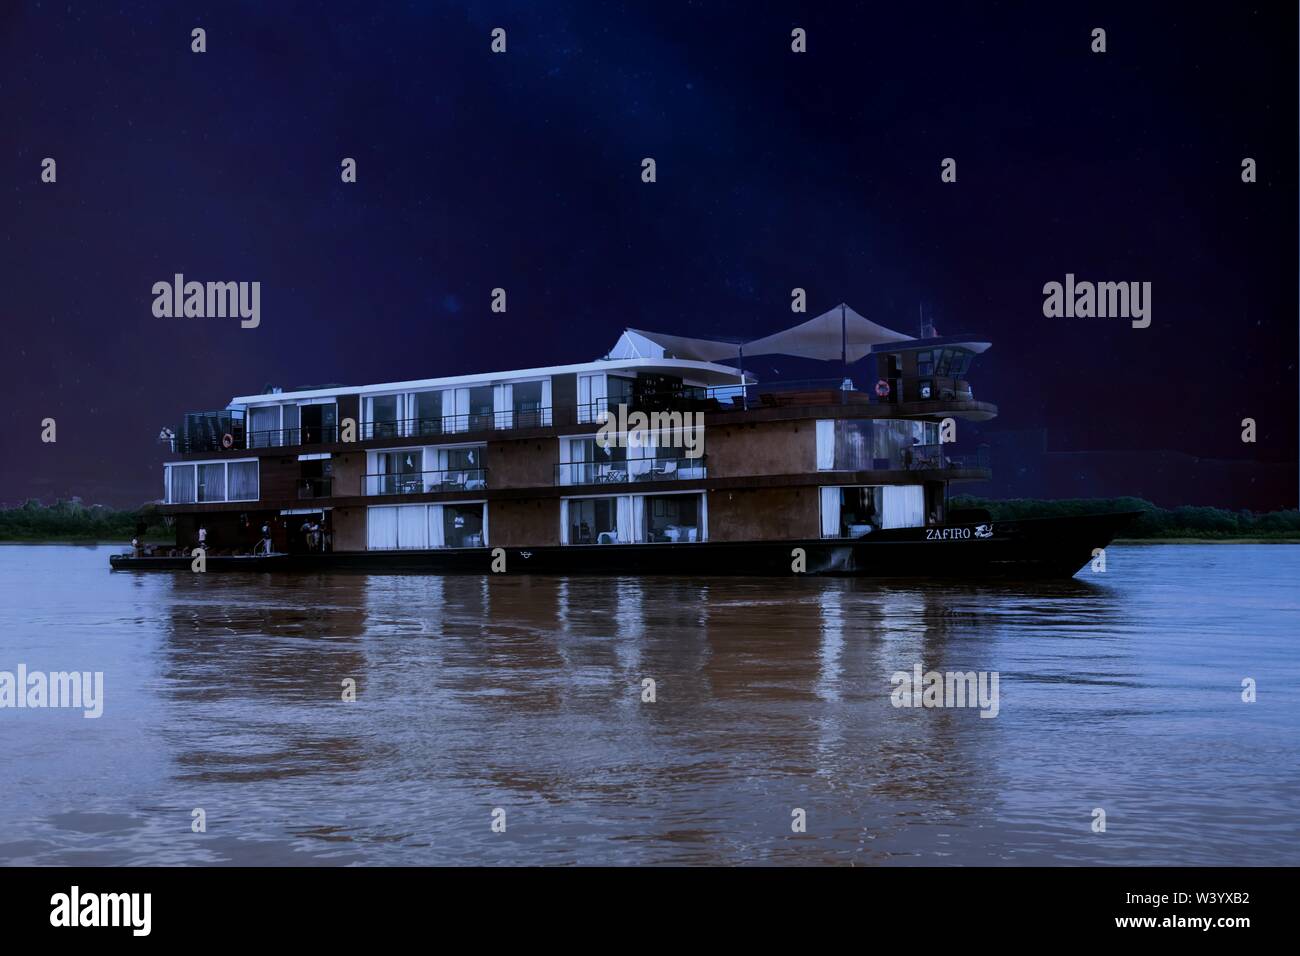 The Luxury Ship Zafiro on the Amazon River in Peru Stock Photo